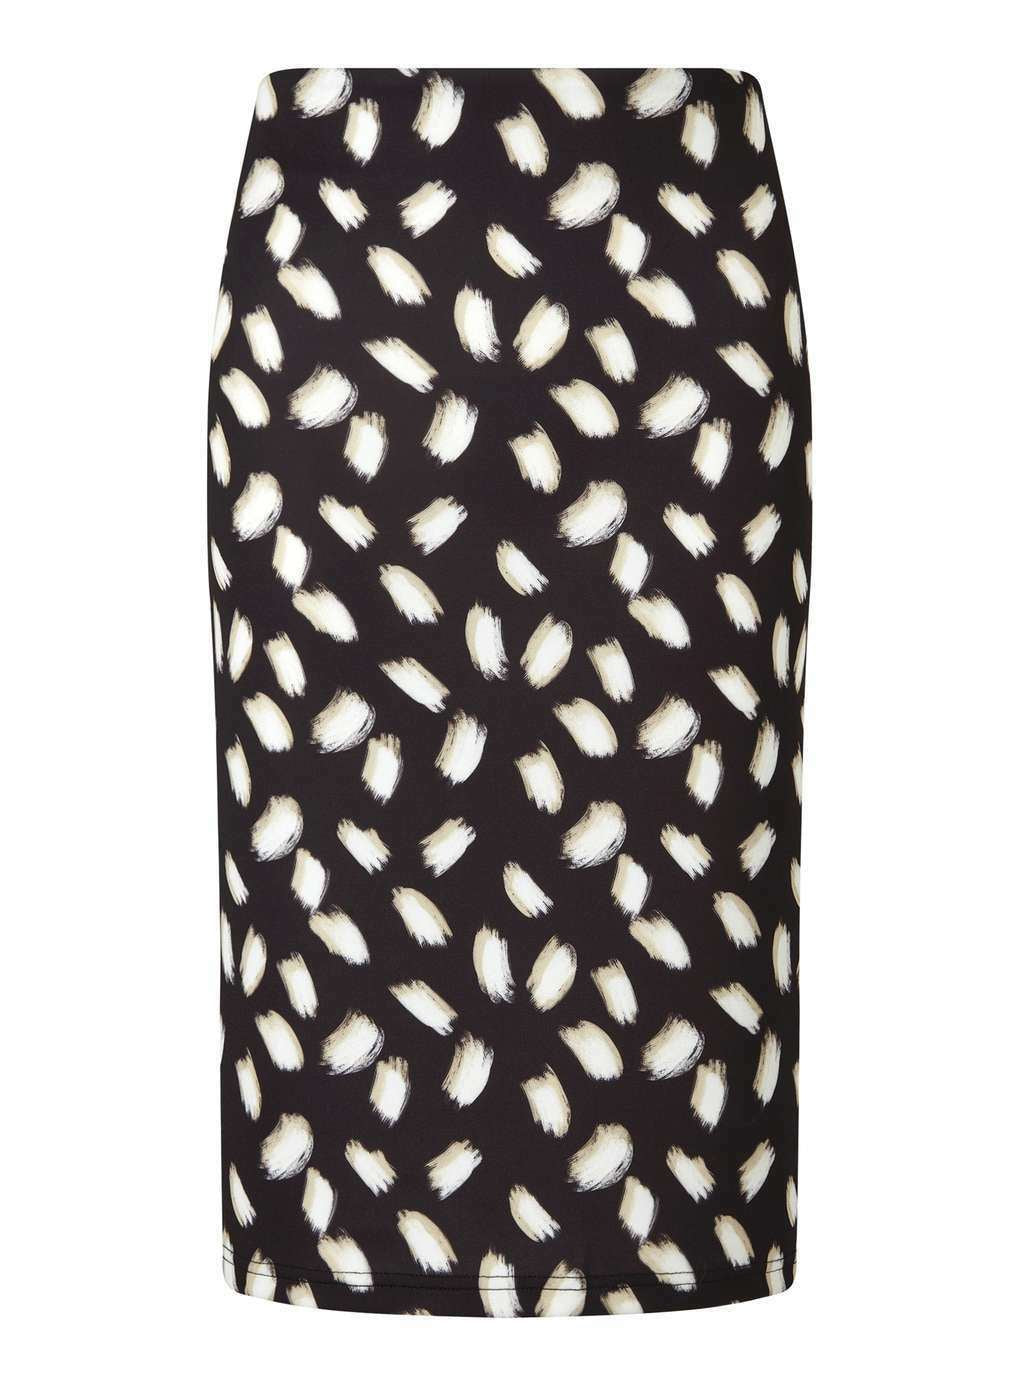 MISS SELFRIDGE Women's Black & Abstract Print Pencil Skirt, size UK 4